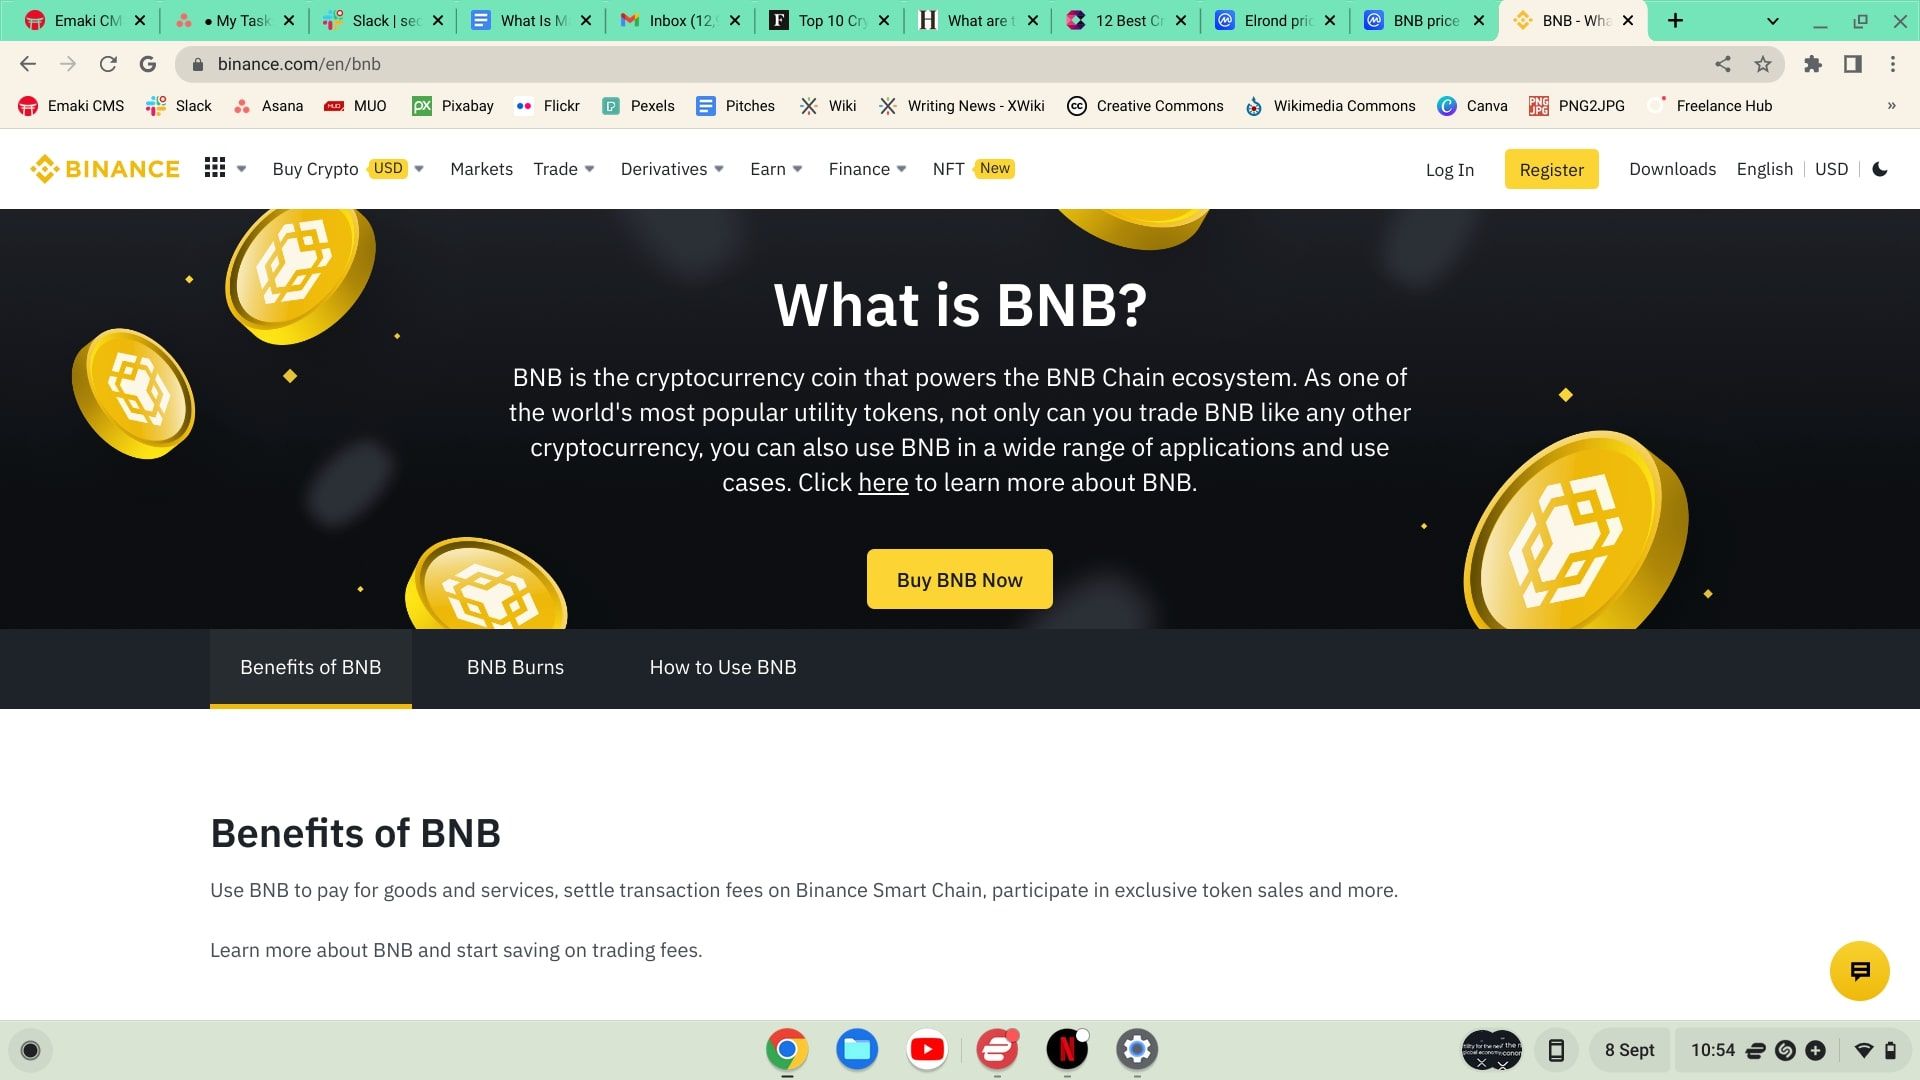 bnb coin webpage screenshot